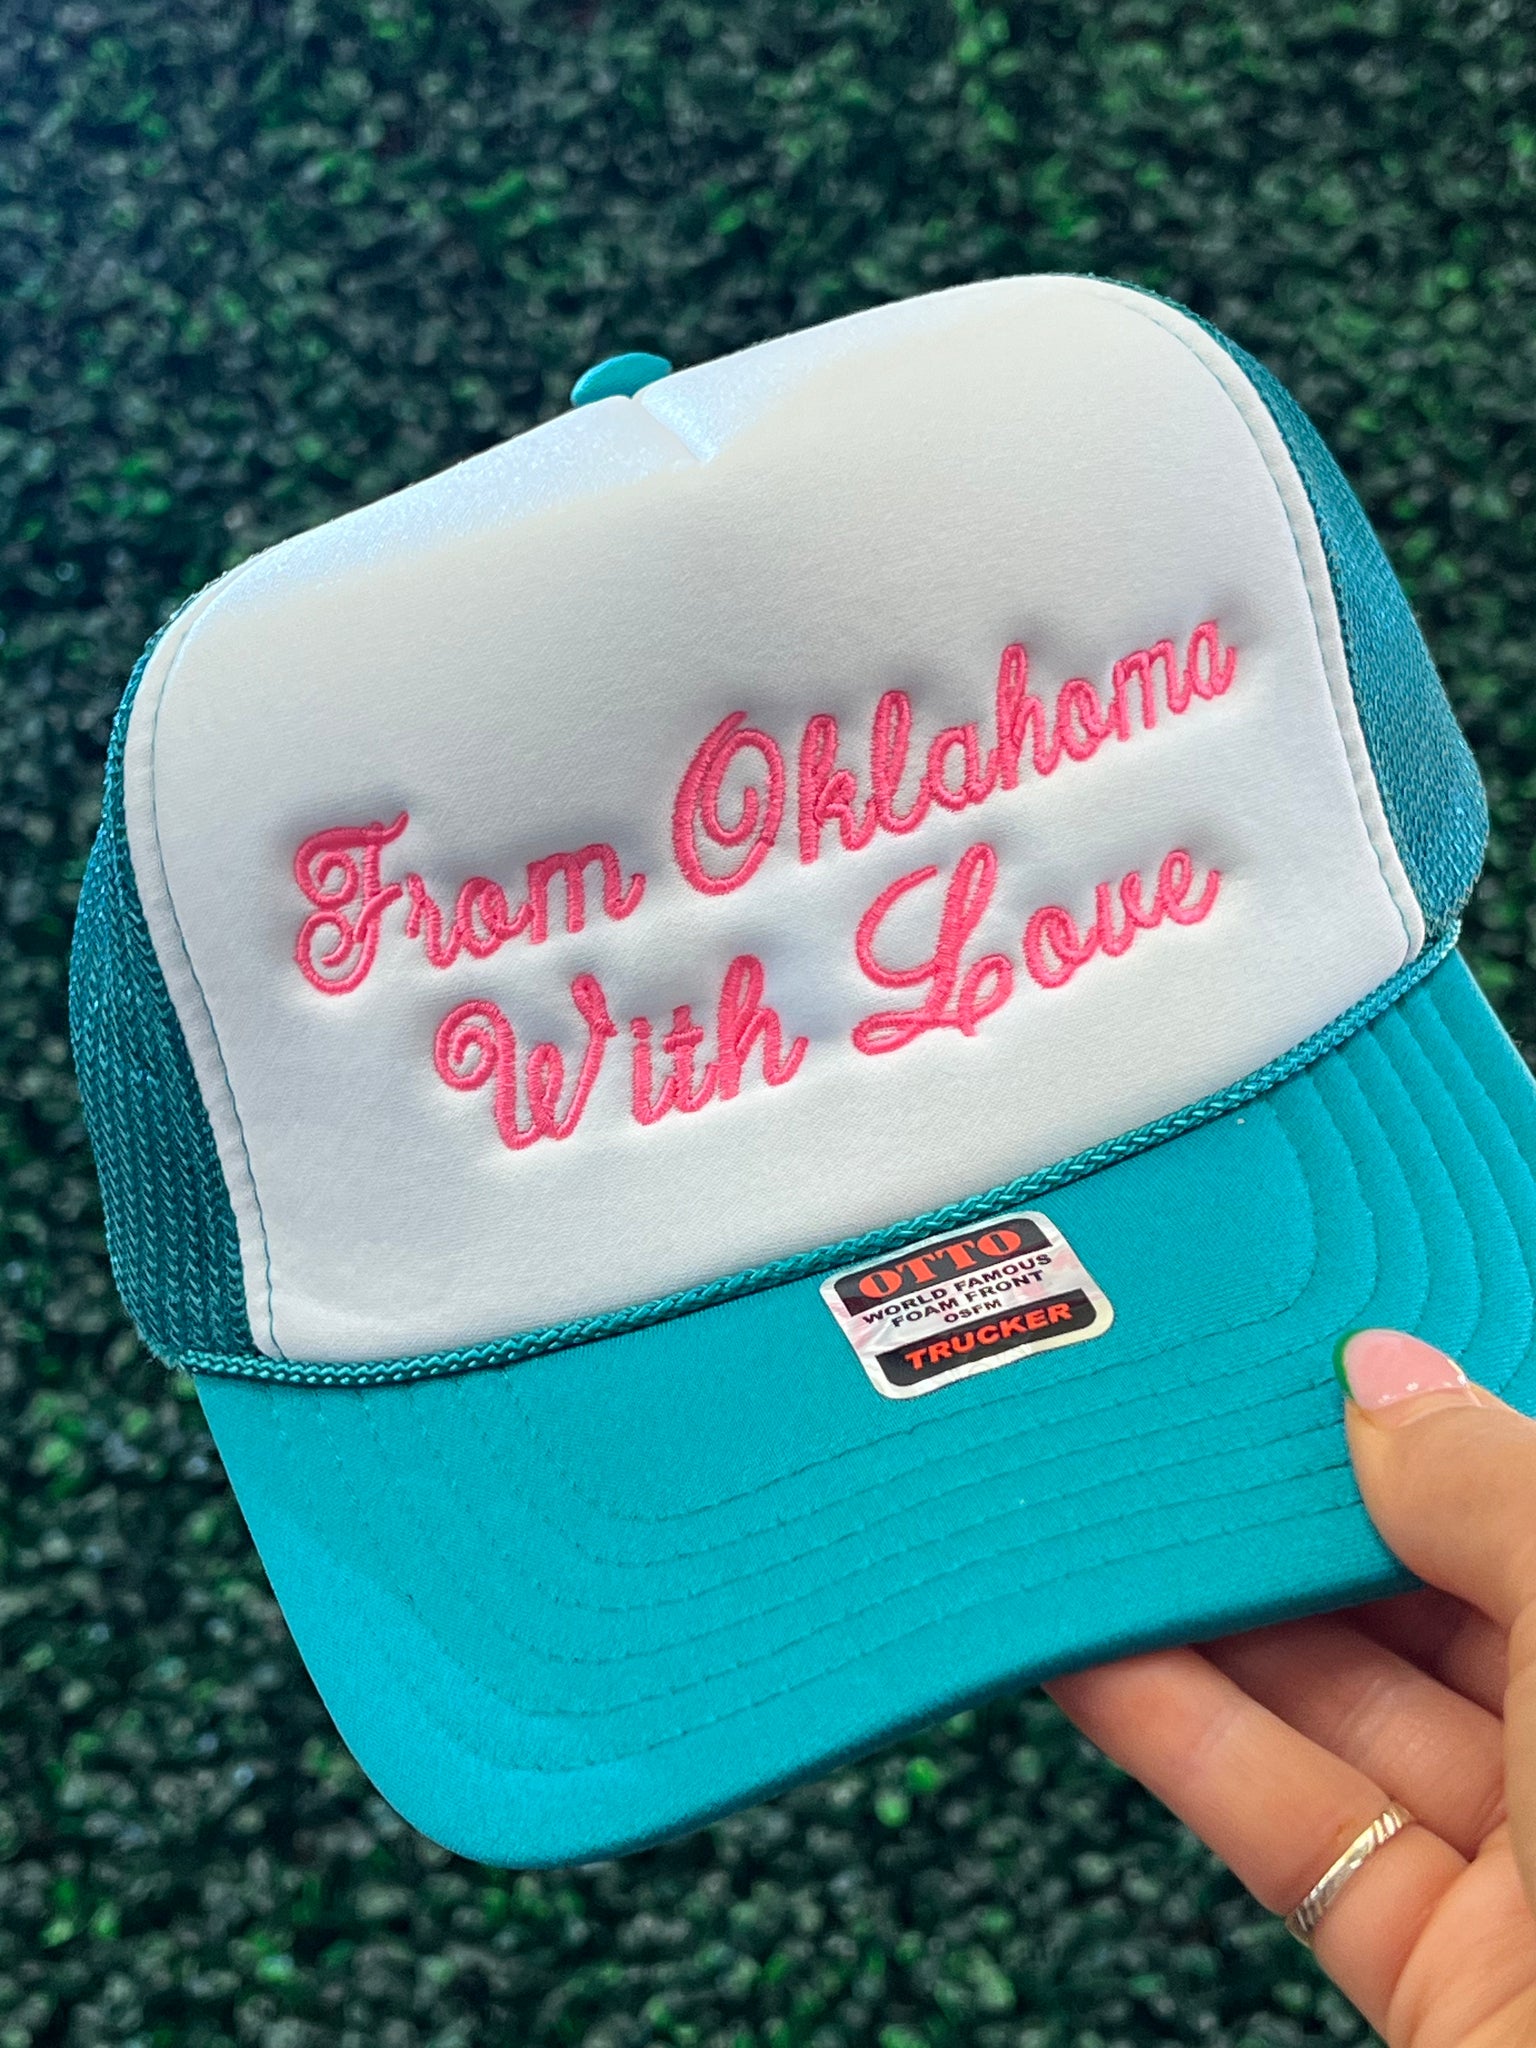 "FROM OKLAHOMA WITH LOVE" TRUCKER HATS